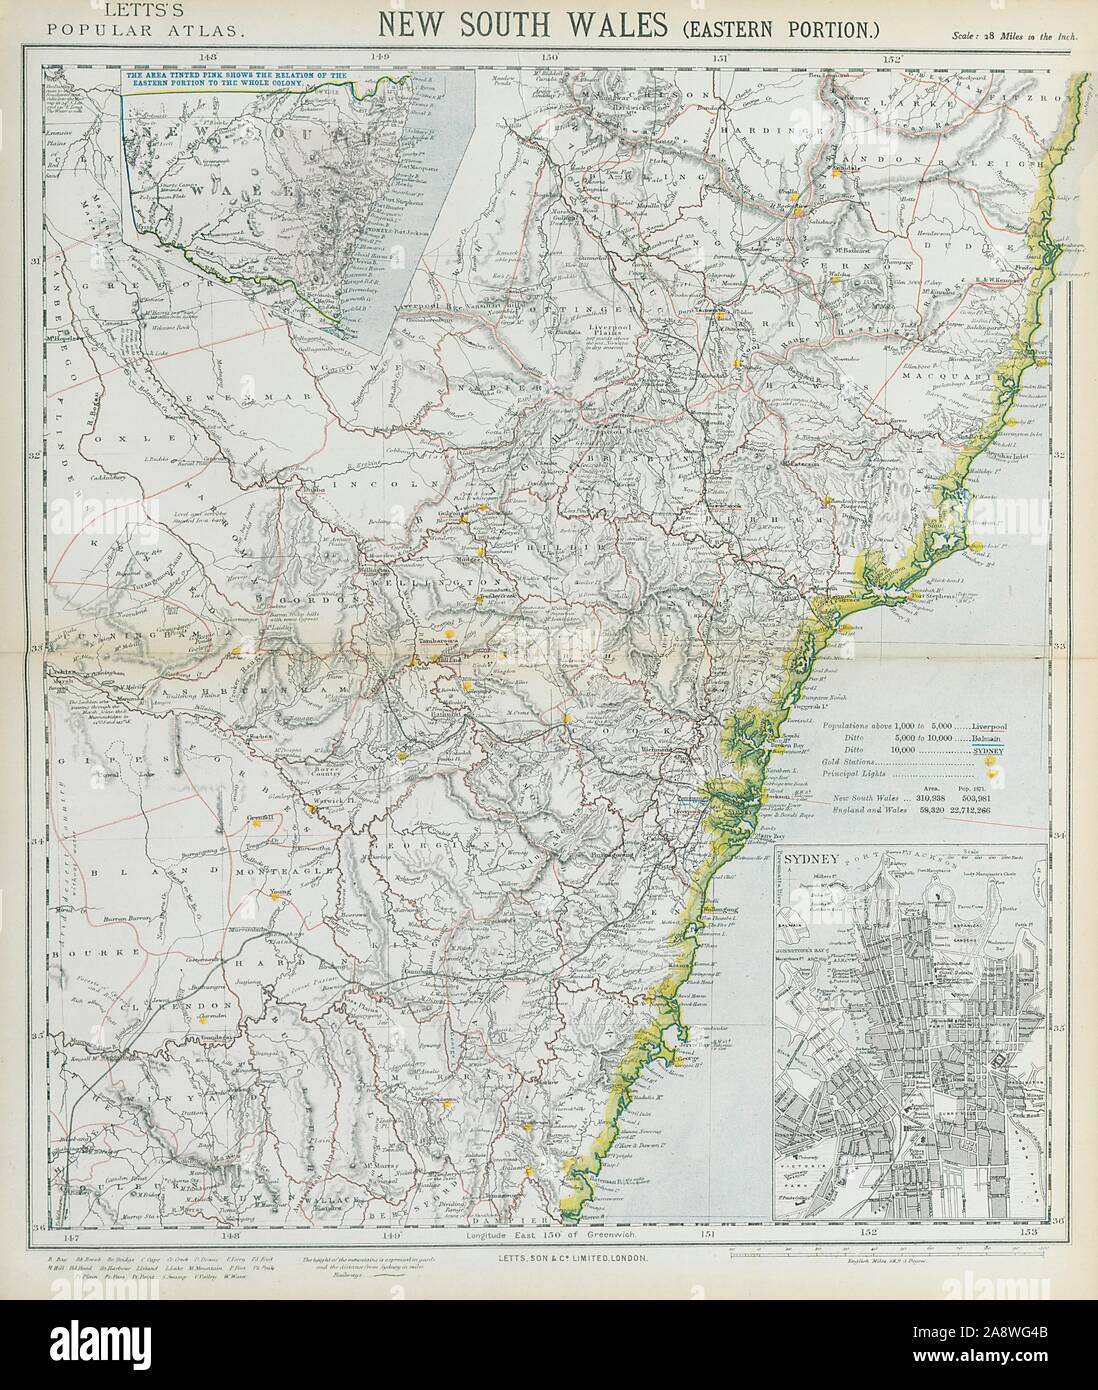 NEW SOUTH WALES übersicht Gold mining Stationen. Sydney City planen. LETTS 1883 Karte Stockfoto